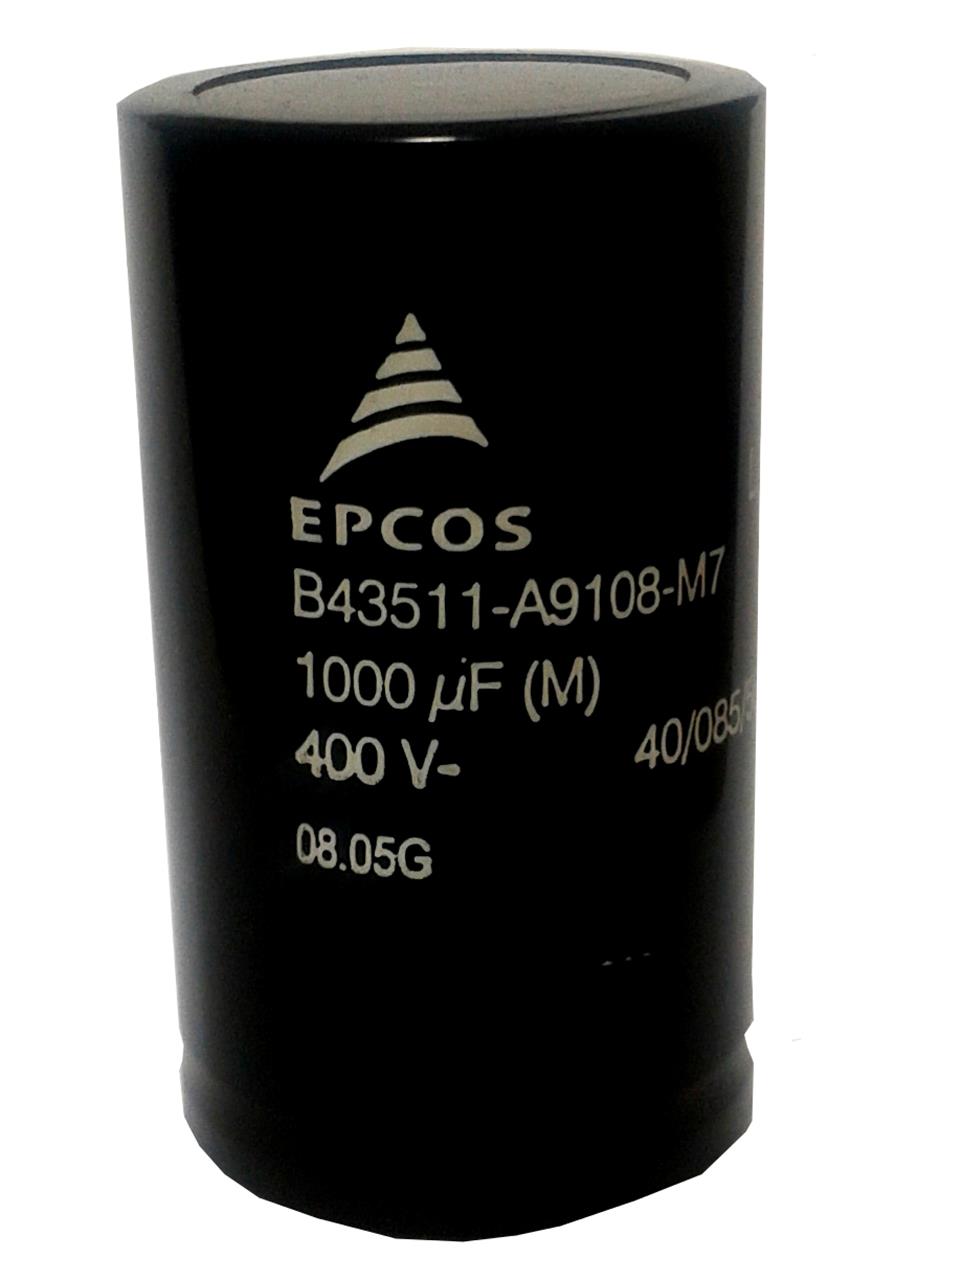 Capacitores - Capacitor 1000uF 400V Epcos